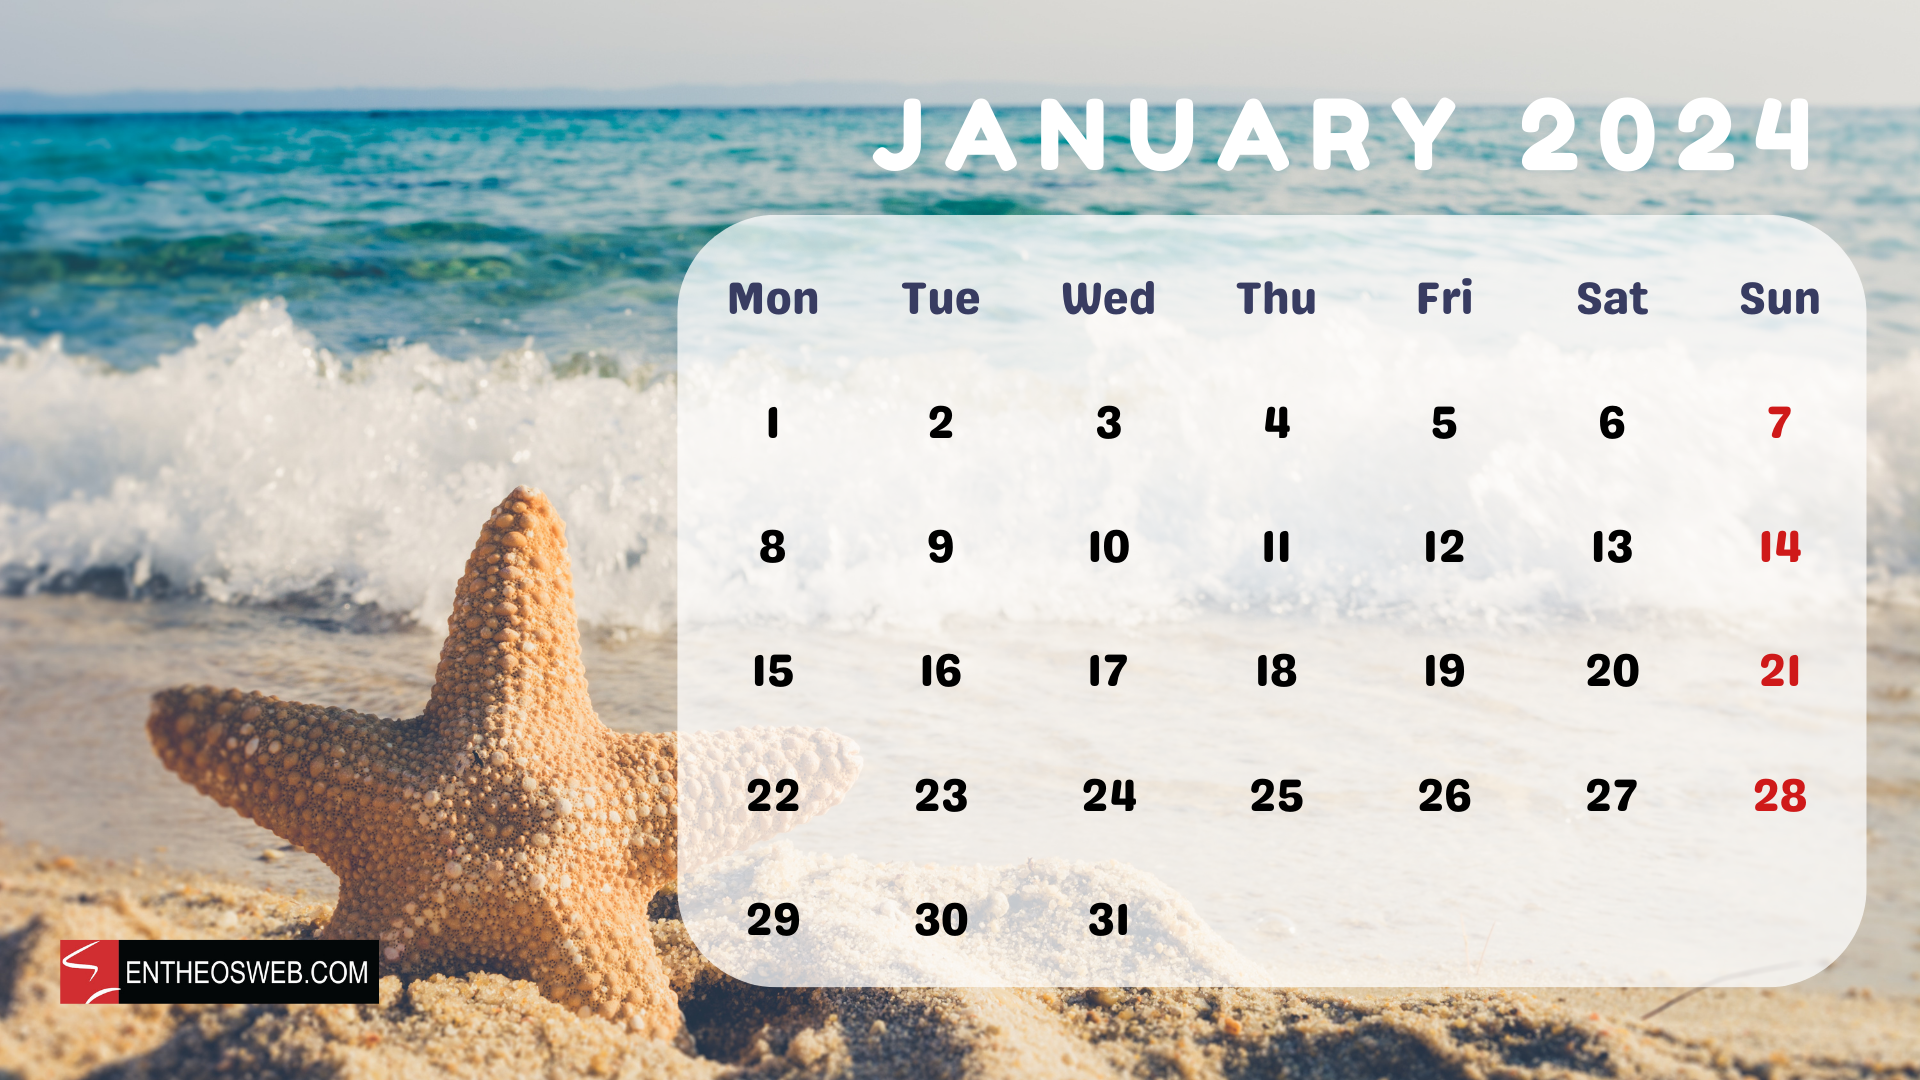 January 2024 Calendar Wallpapers Top Free January 2024 Calendar